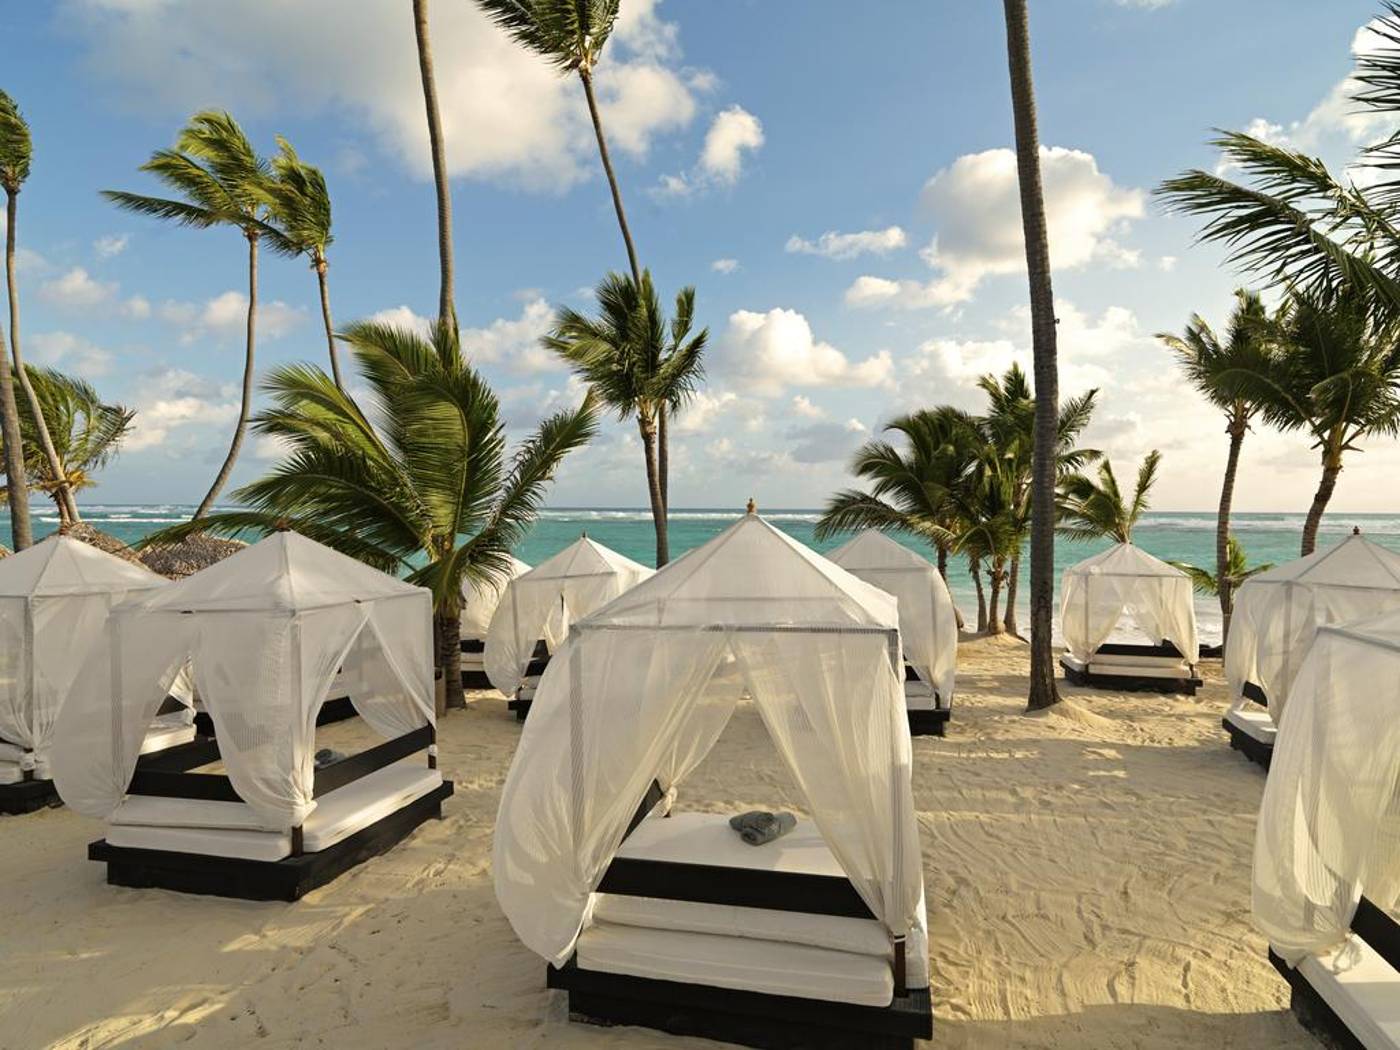 Ocean Blue and Sand Beach Resort in Dominican Republic